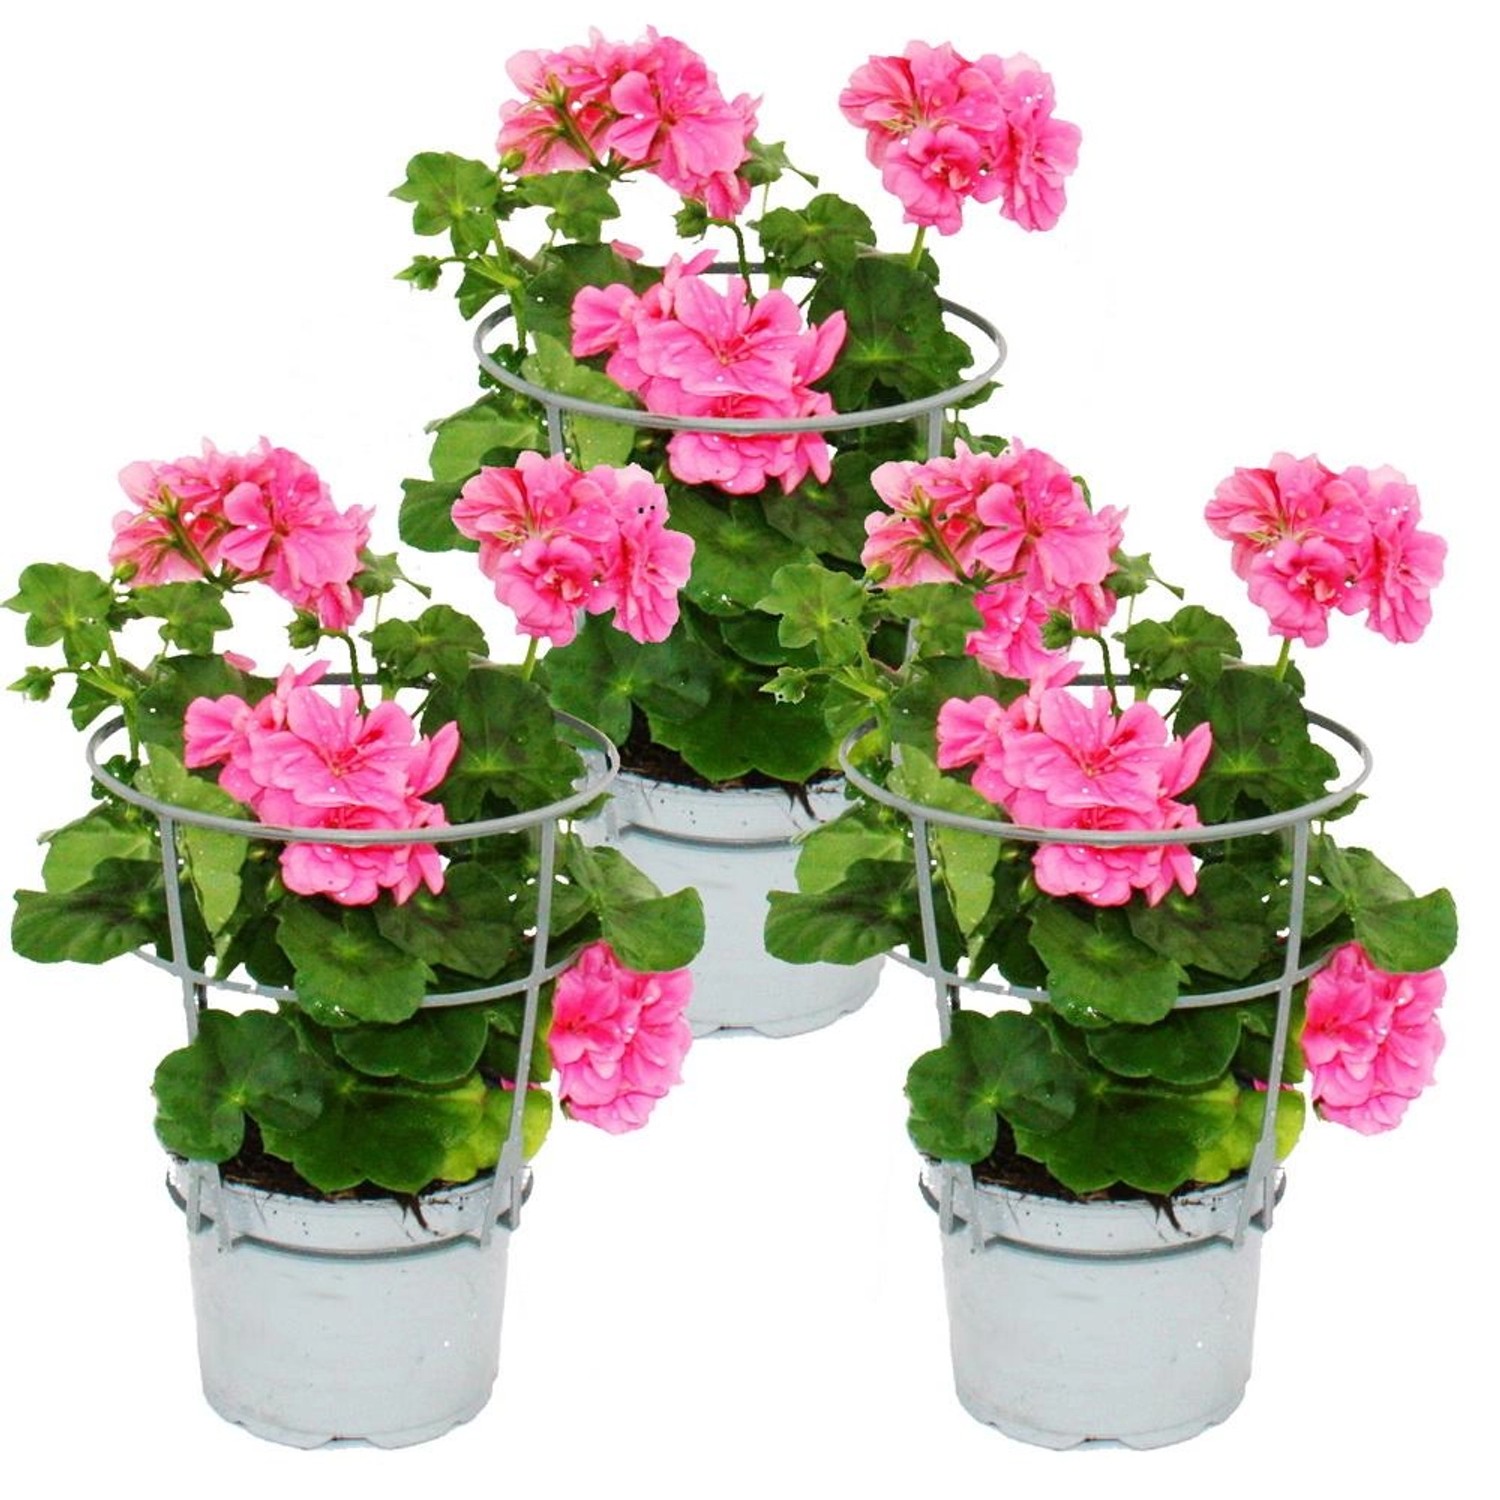 Exotenherz Geranien Hängend Pelargonium Peltatum 12cm Topf Set mit 3 Pflanzen Rosa